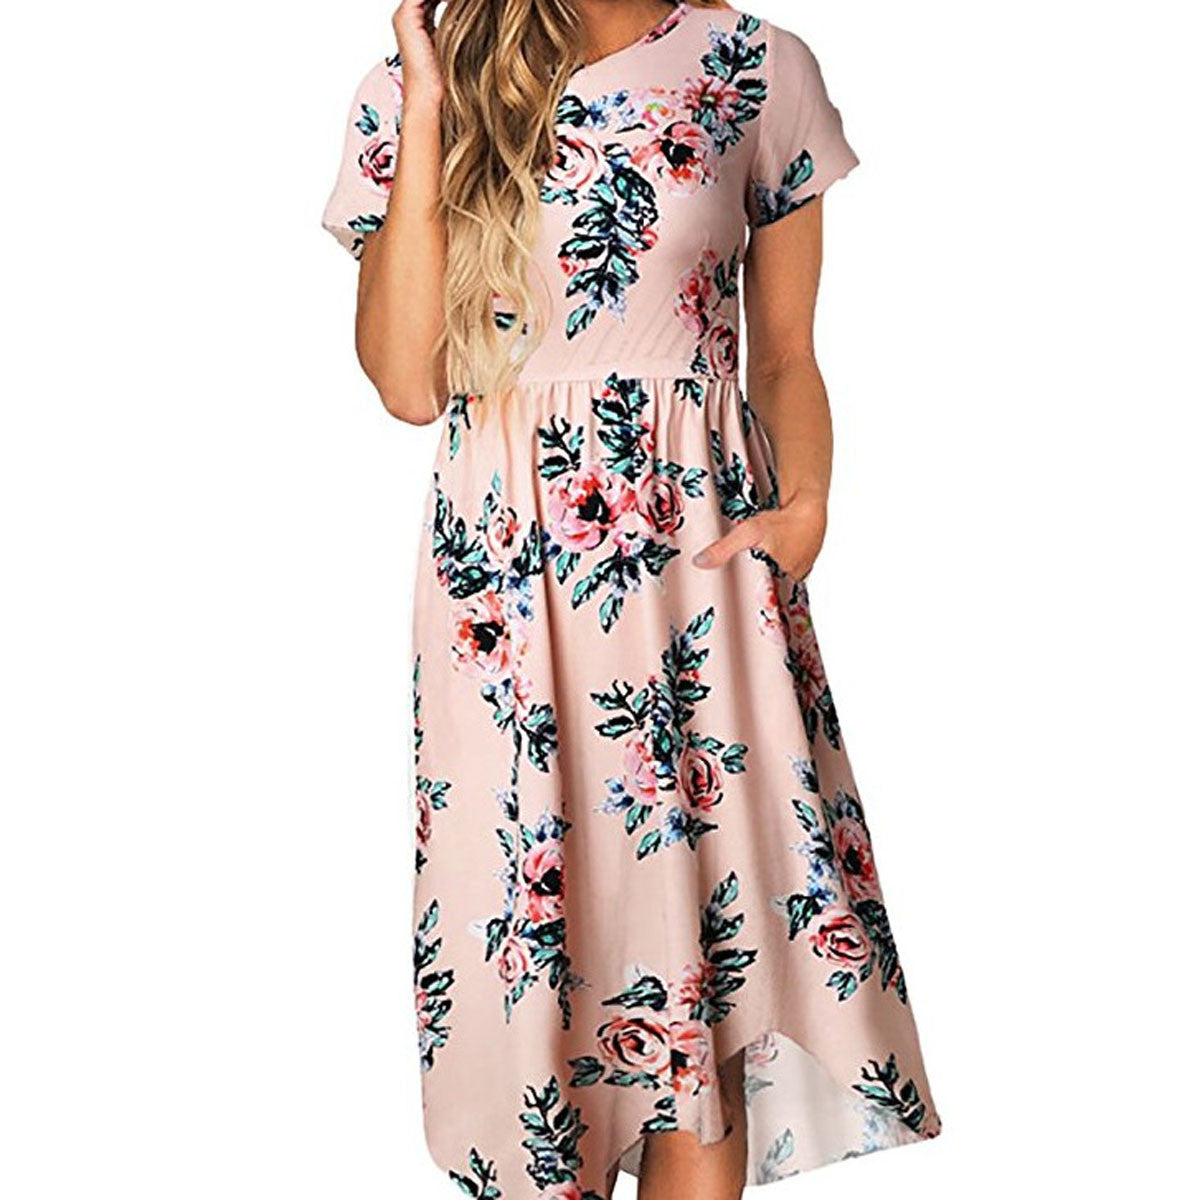 Flower Print Short Sleeves Tee Length Party Dress